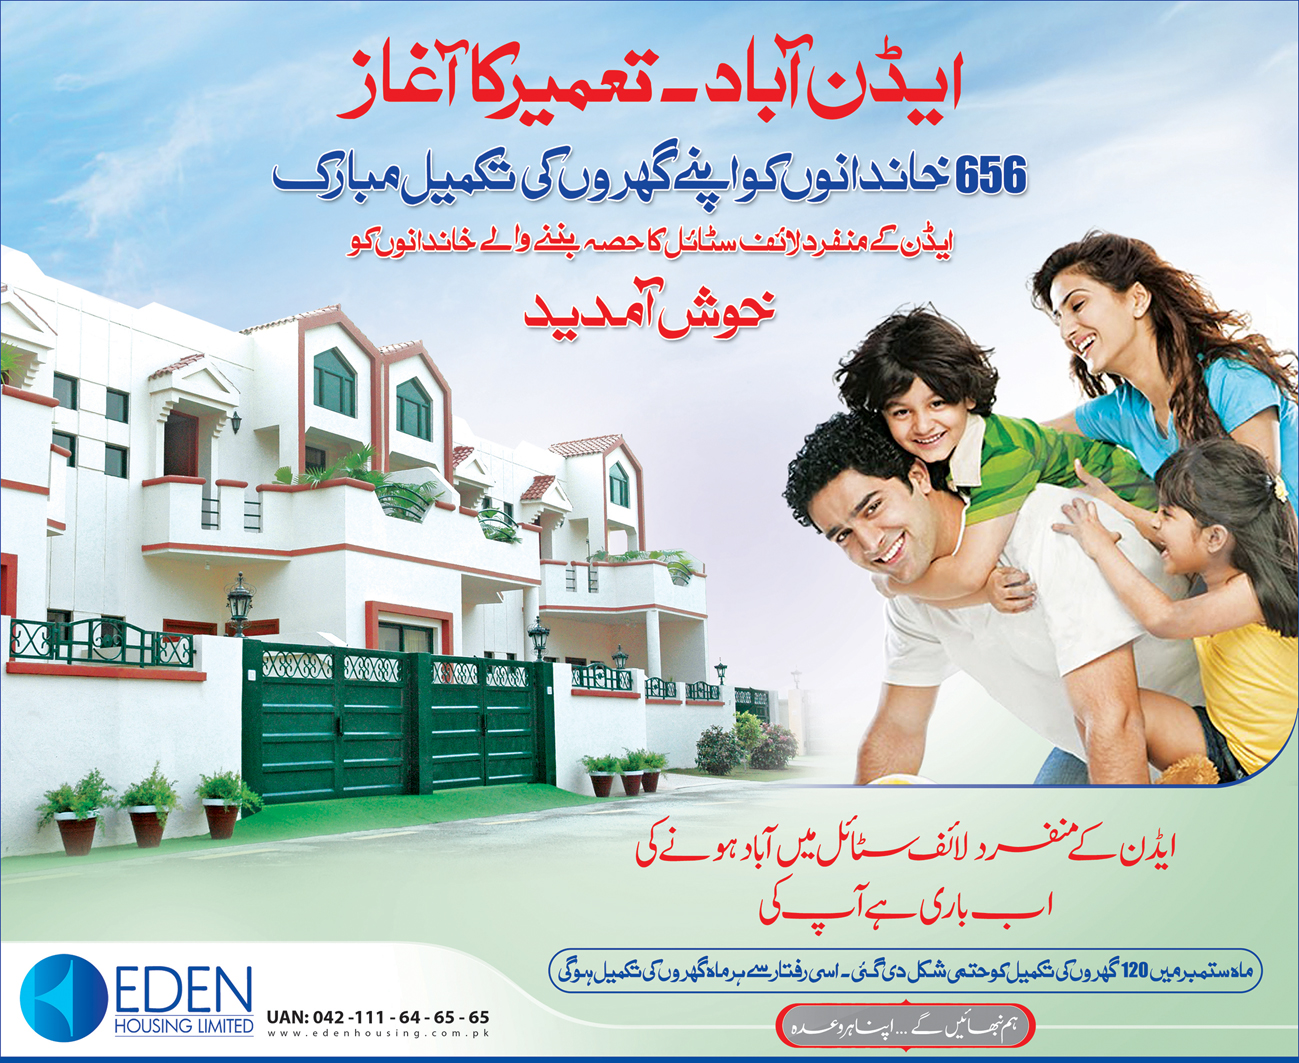 Oct-13-2012-Eden-Abad-Completion-of-Homes-Ad-27x8-Urdu-Colour-09-copy1